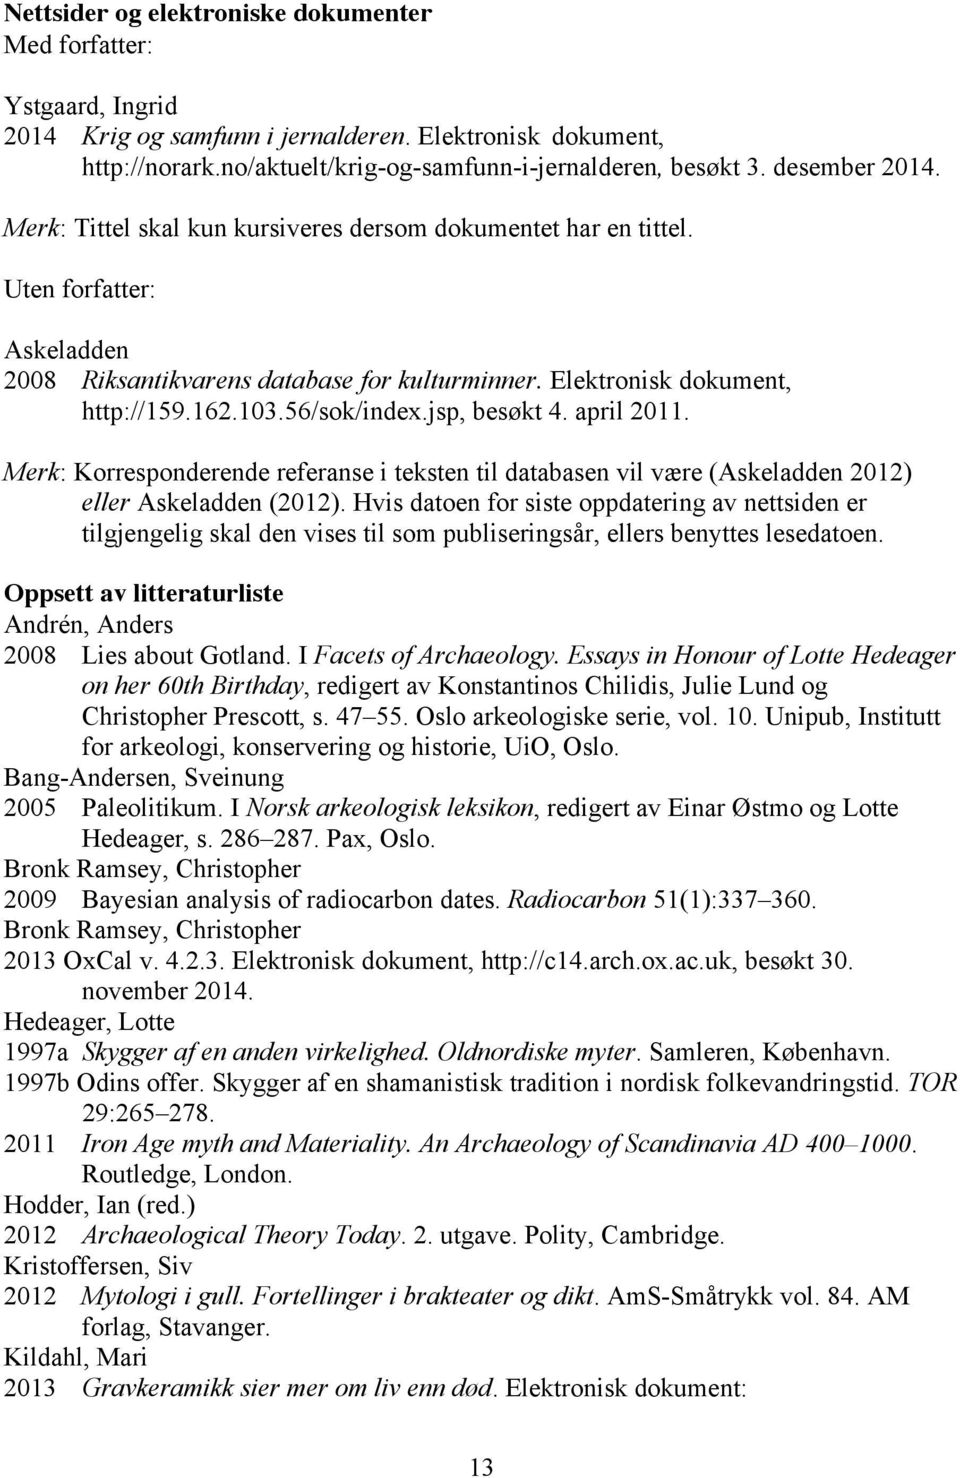 56/sok/index.jsp, besøkt 4. april 2011. Merk: Korresponderende referanse i teksten til databasen vil være (Askeladden 2012) eller Askeladden (2012).